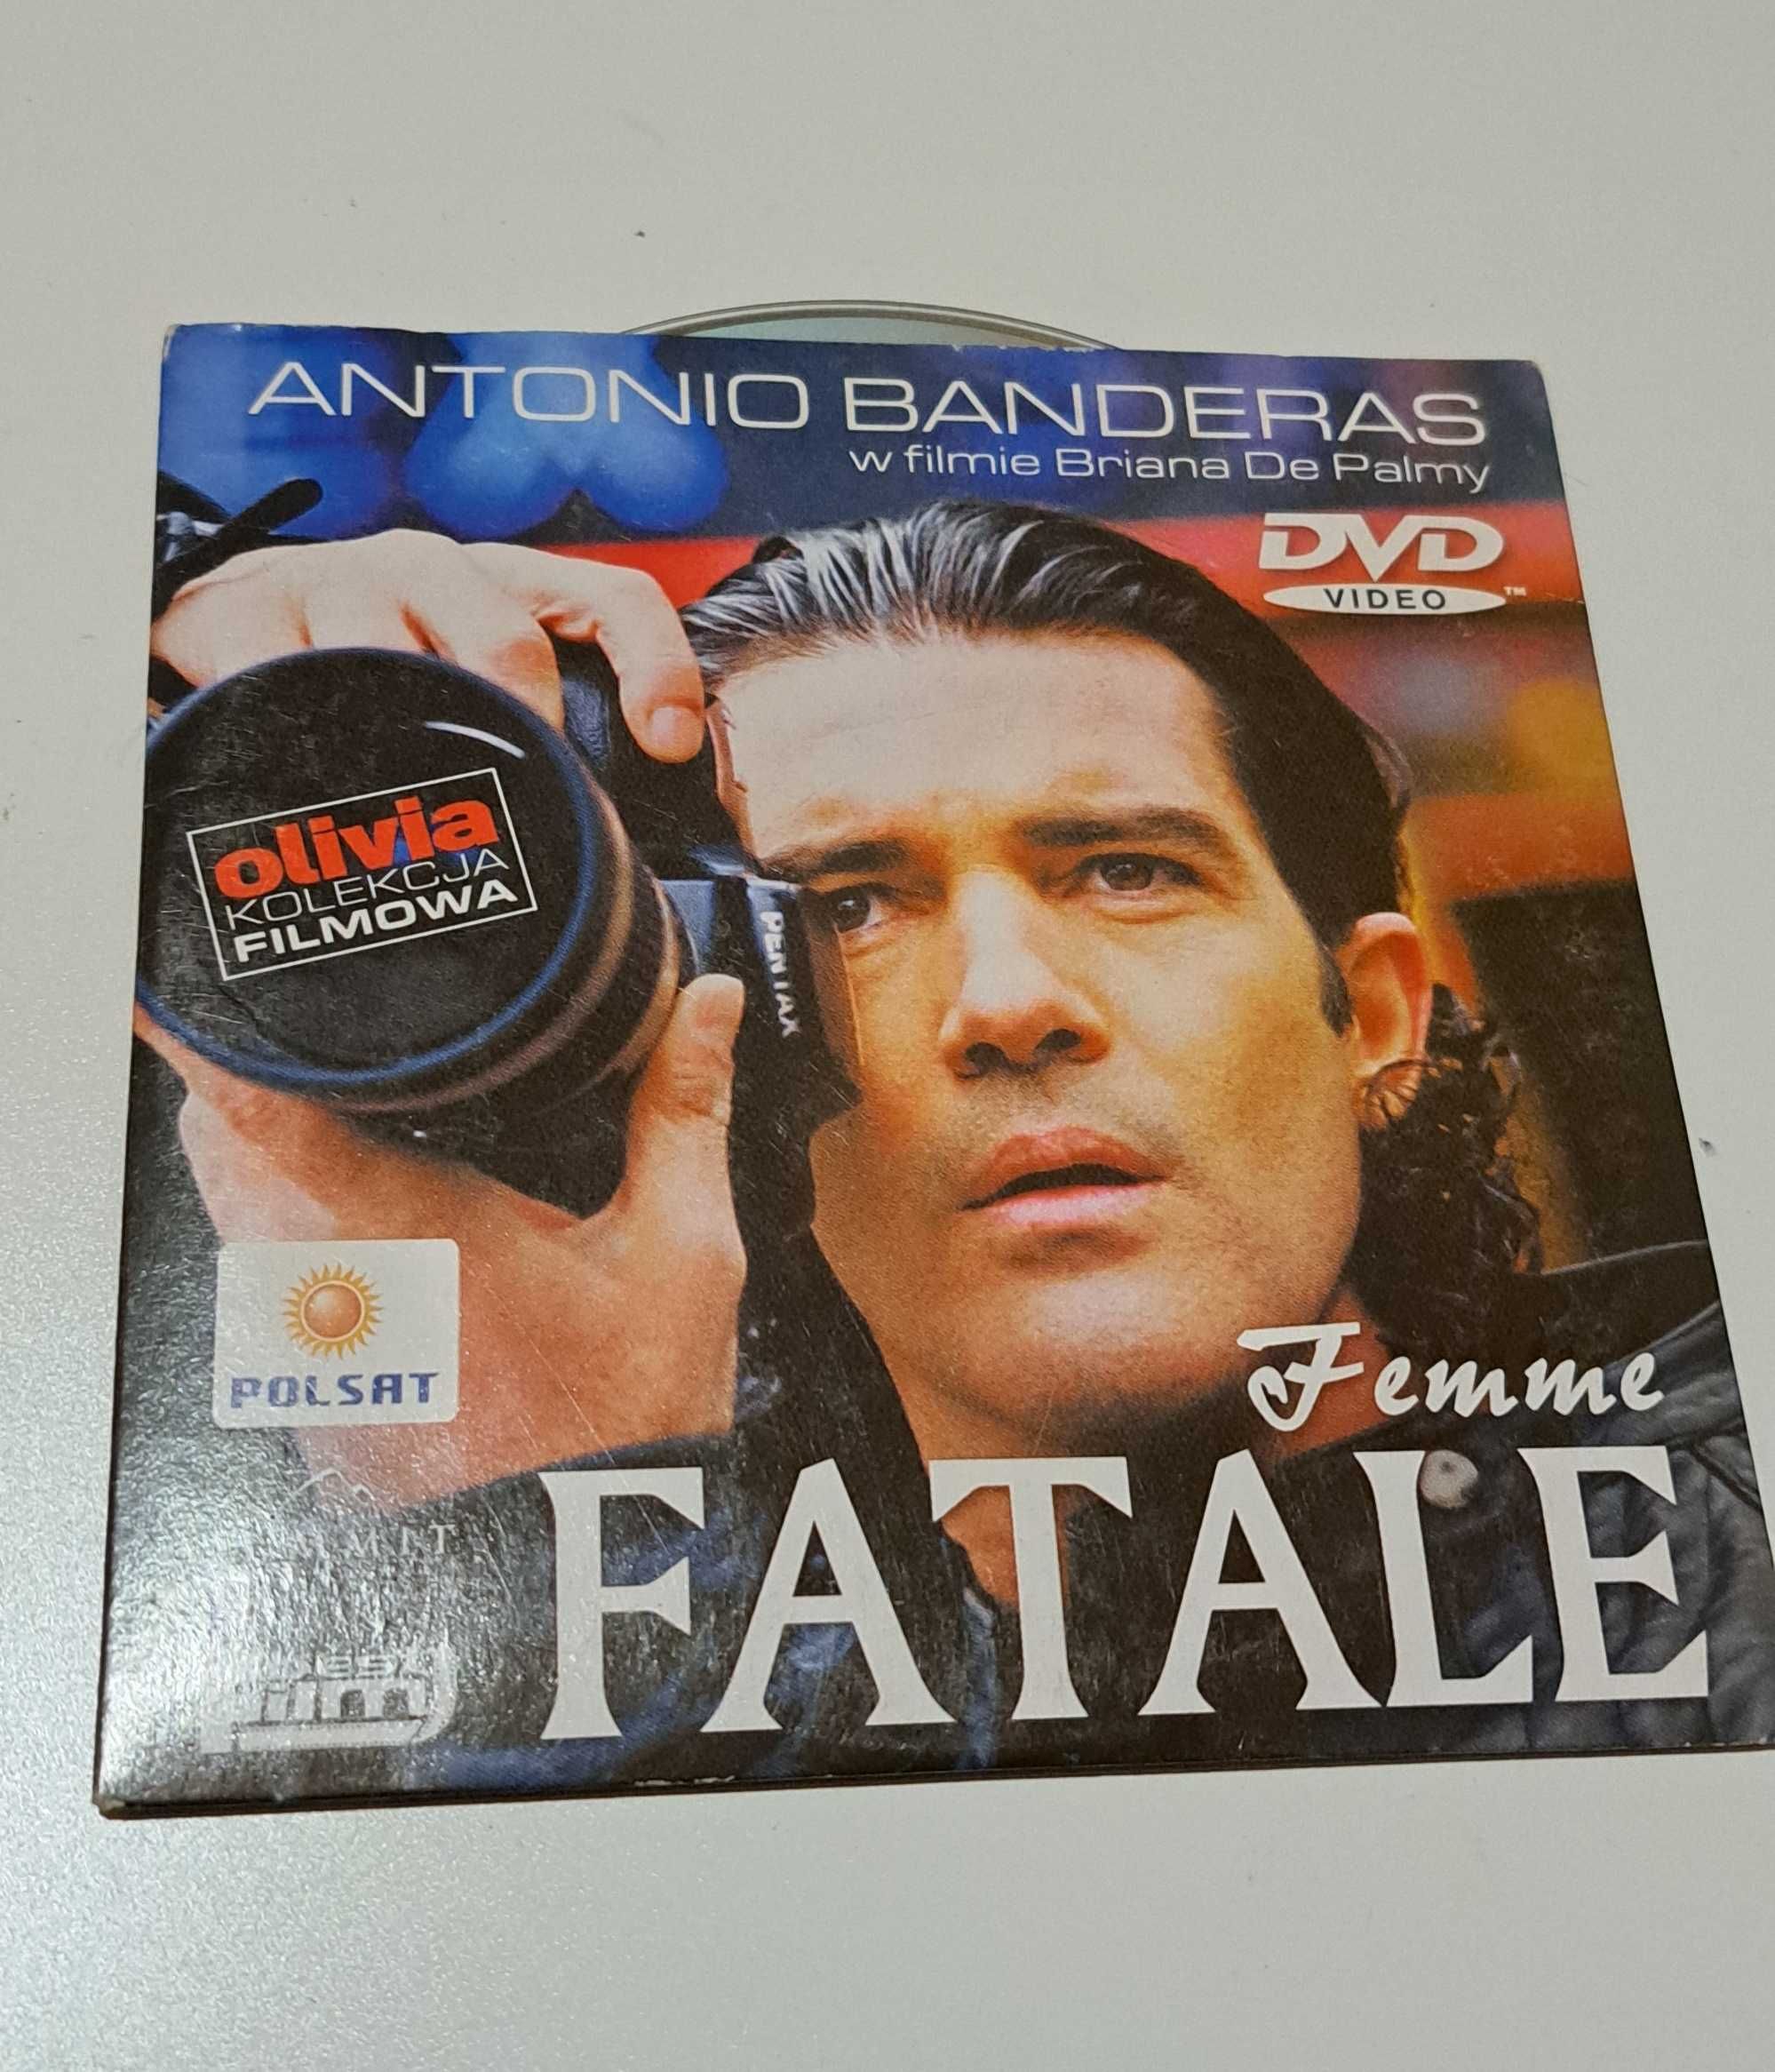 Femme Fatale film na dvd